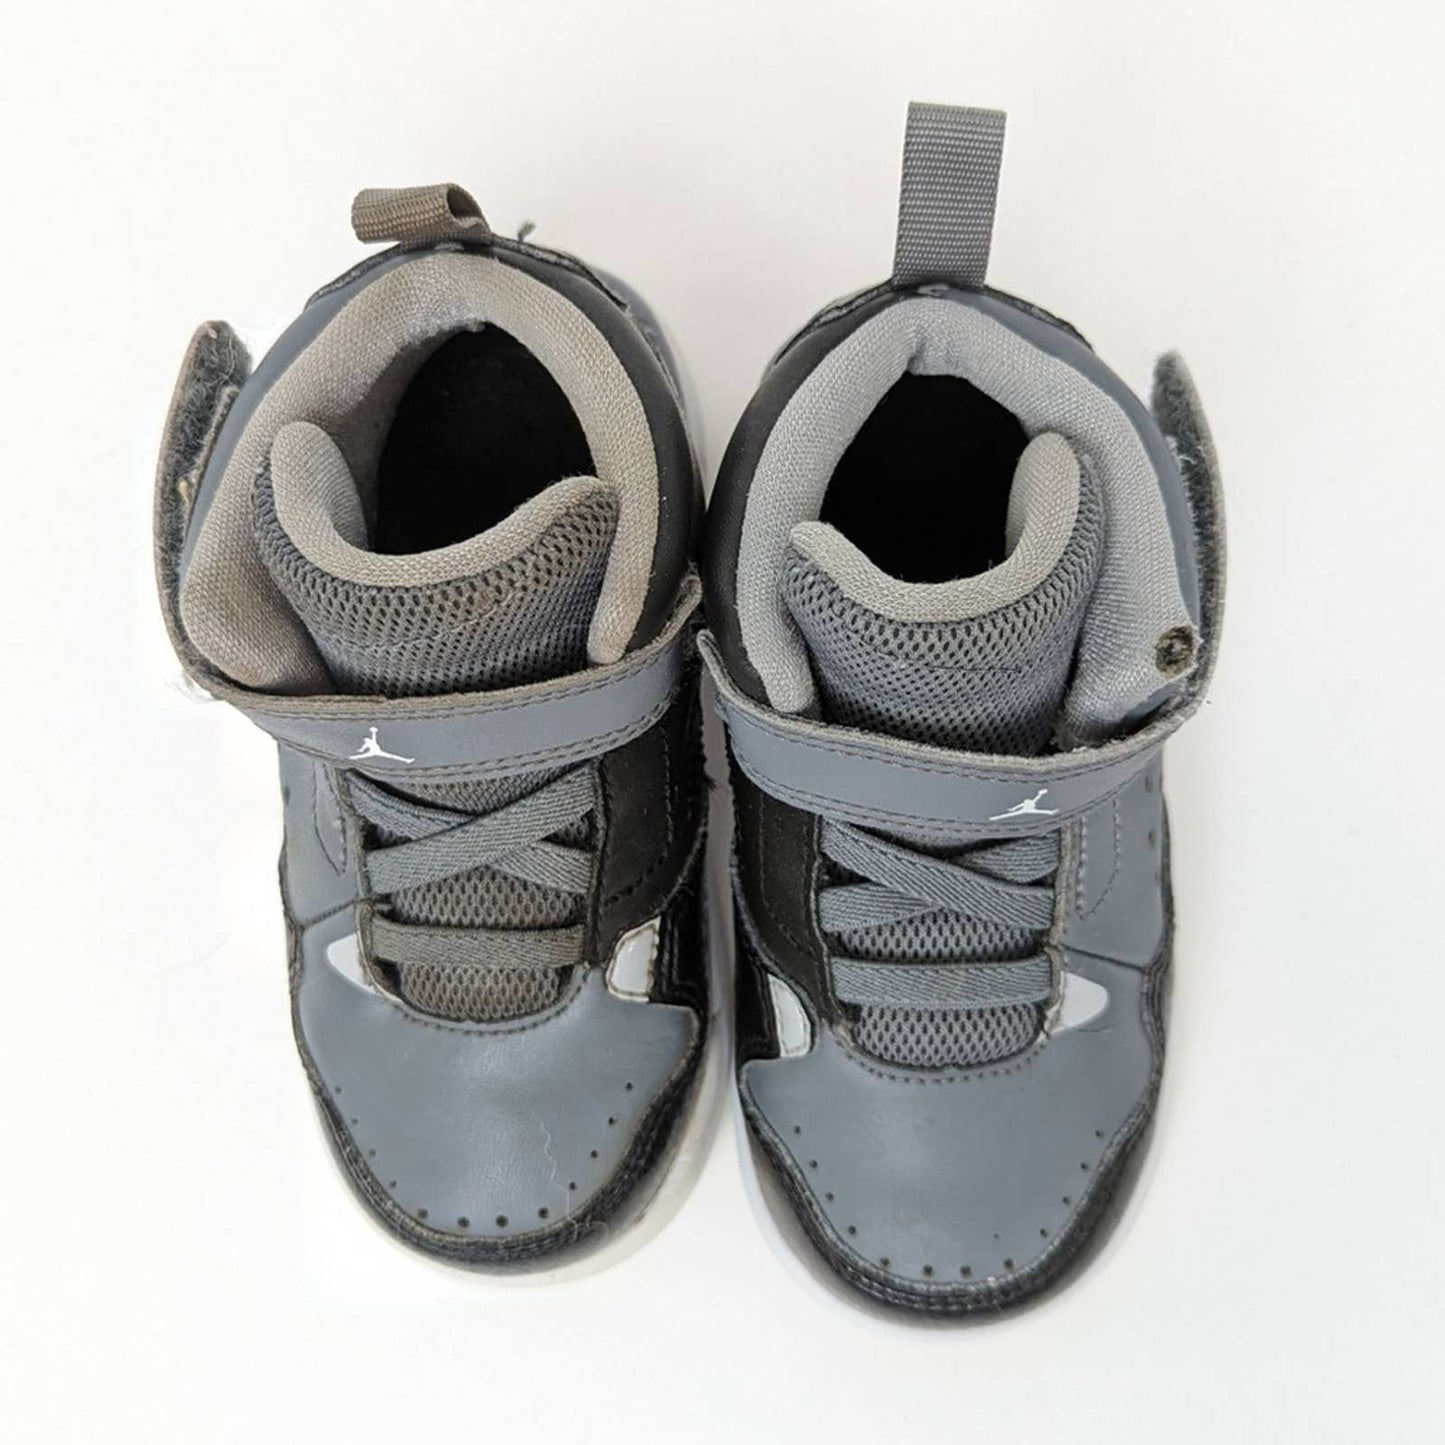 Nike Air Jordan Flight SC-3 (BT) Baby Toddlers Basketball Shoes - 7C